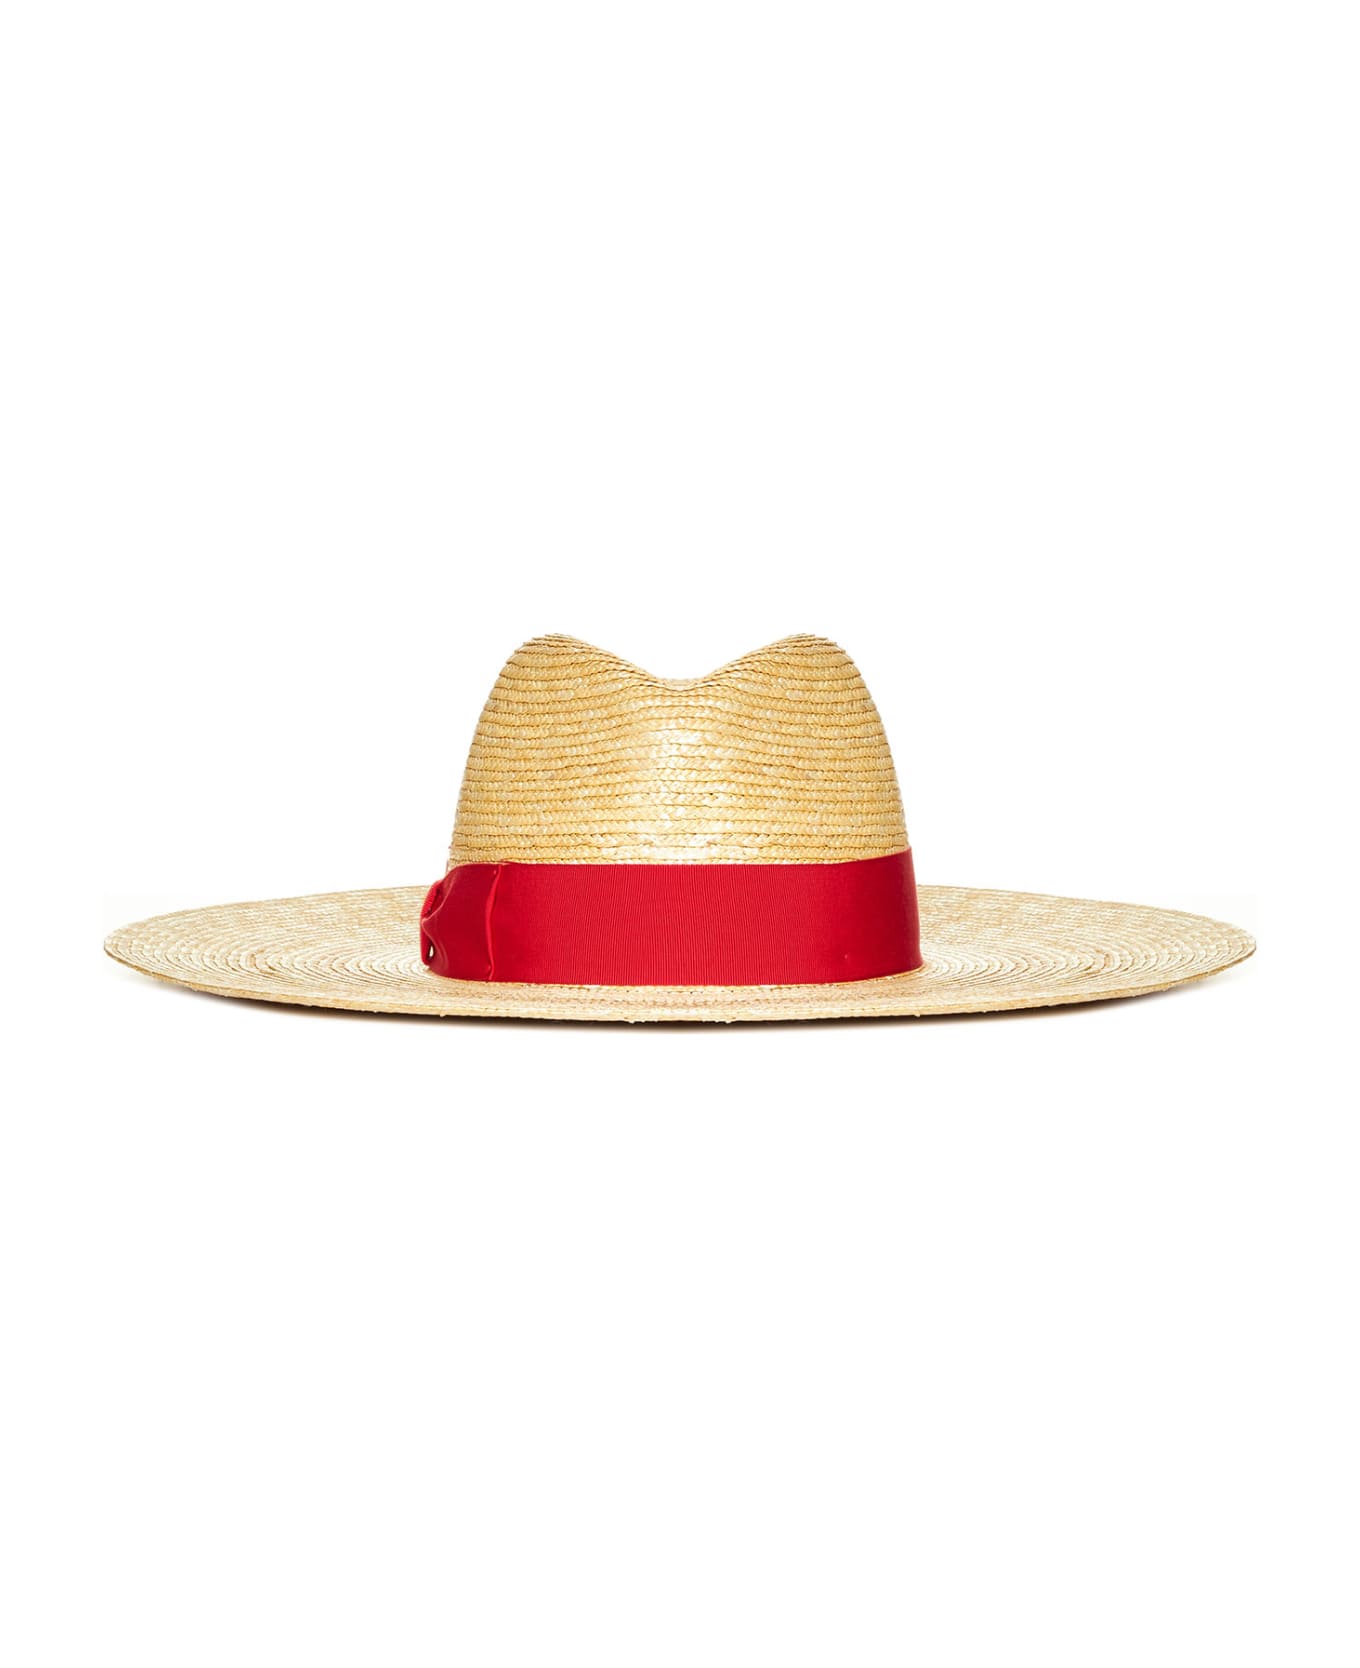 Borsalino Hat - Naturale 7145 cinta 0130